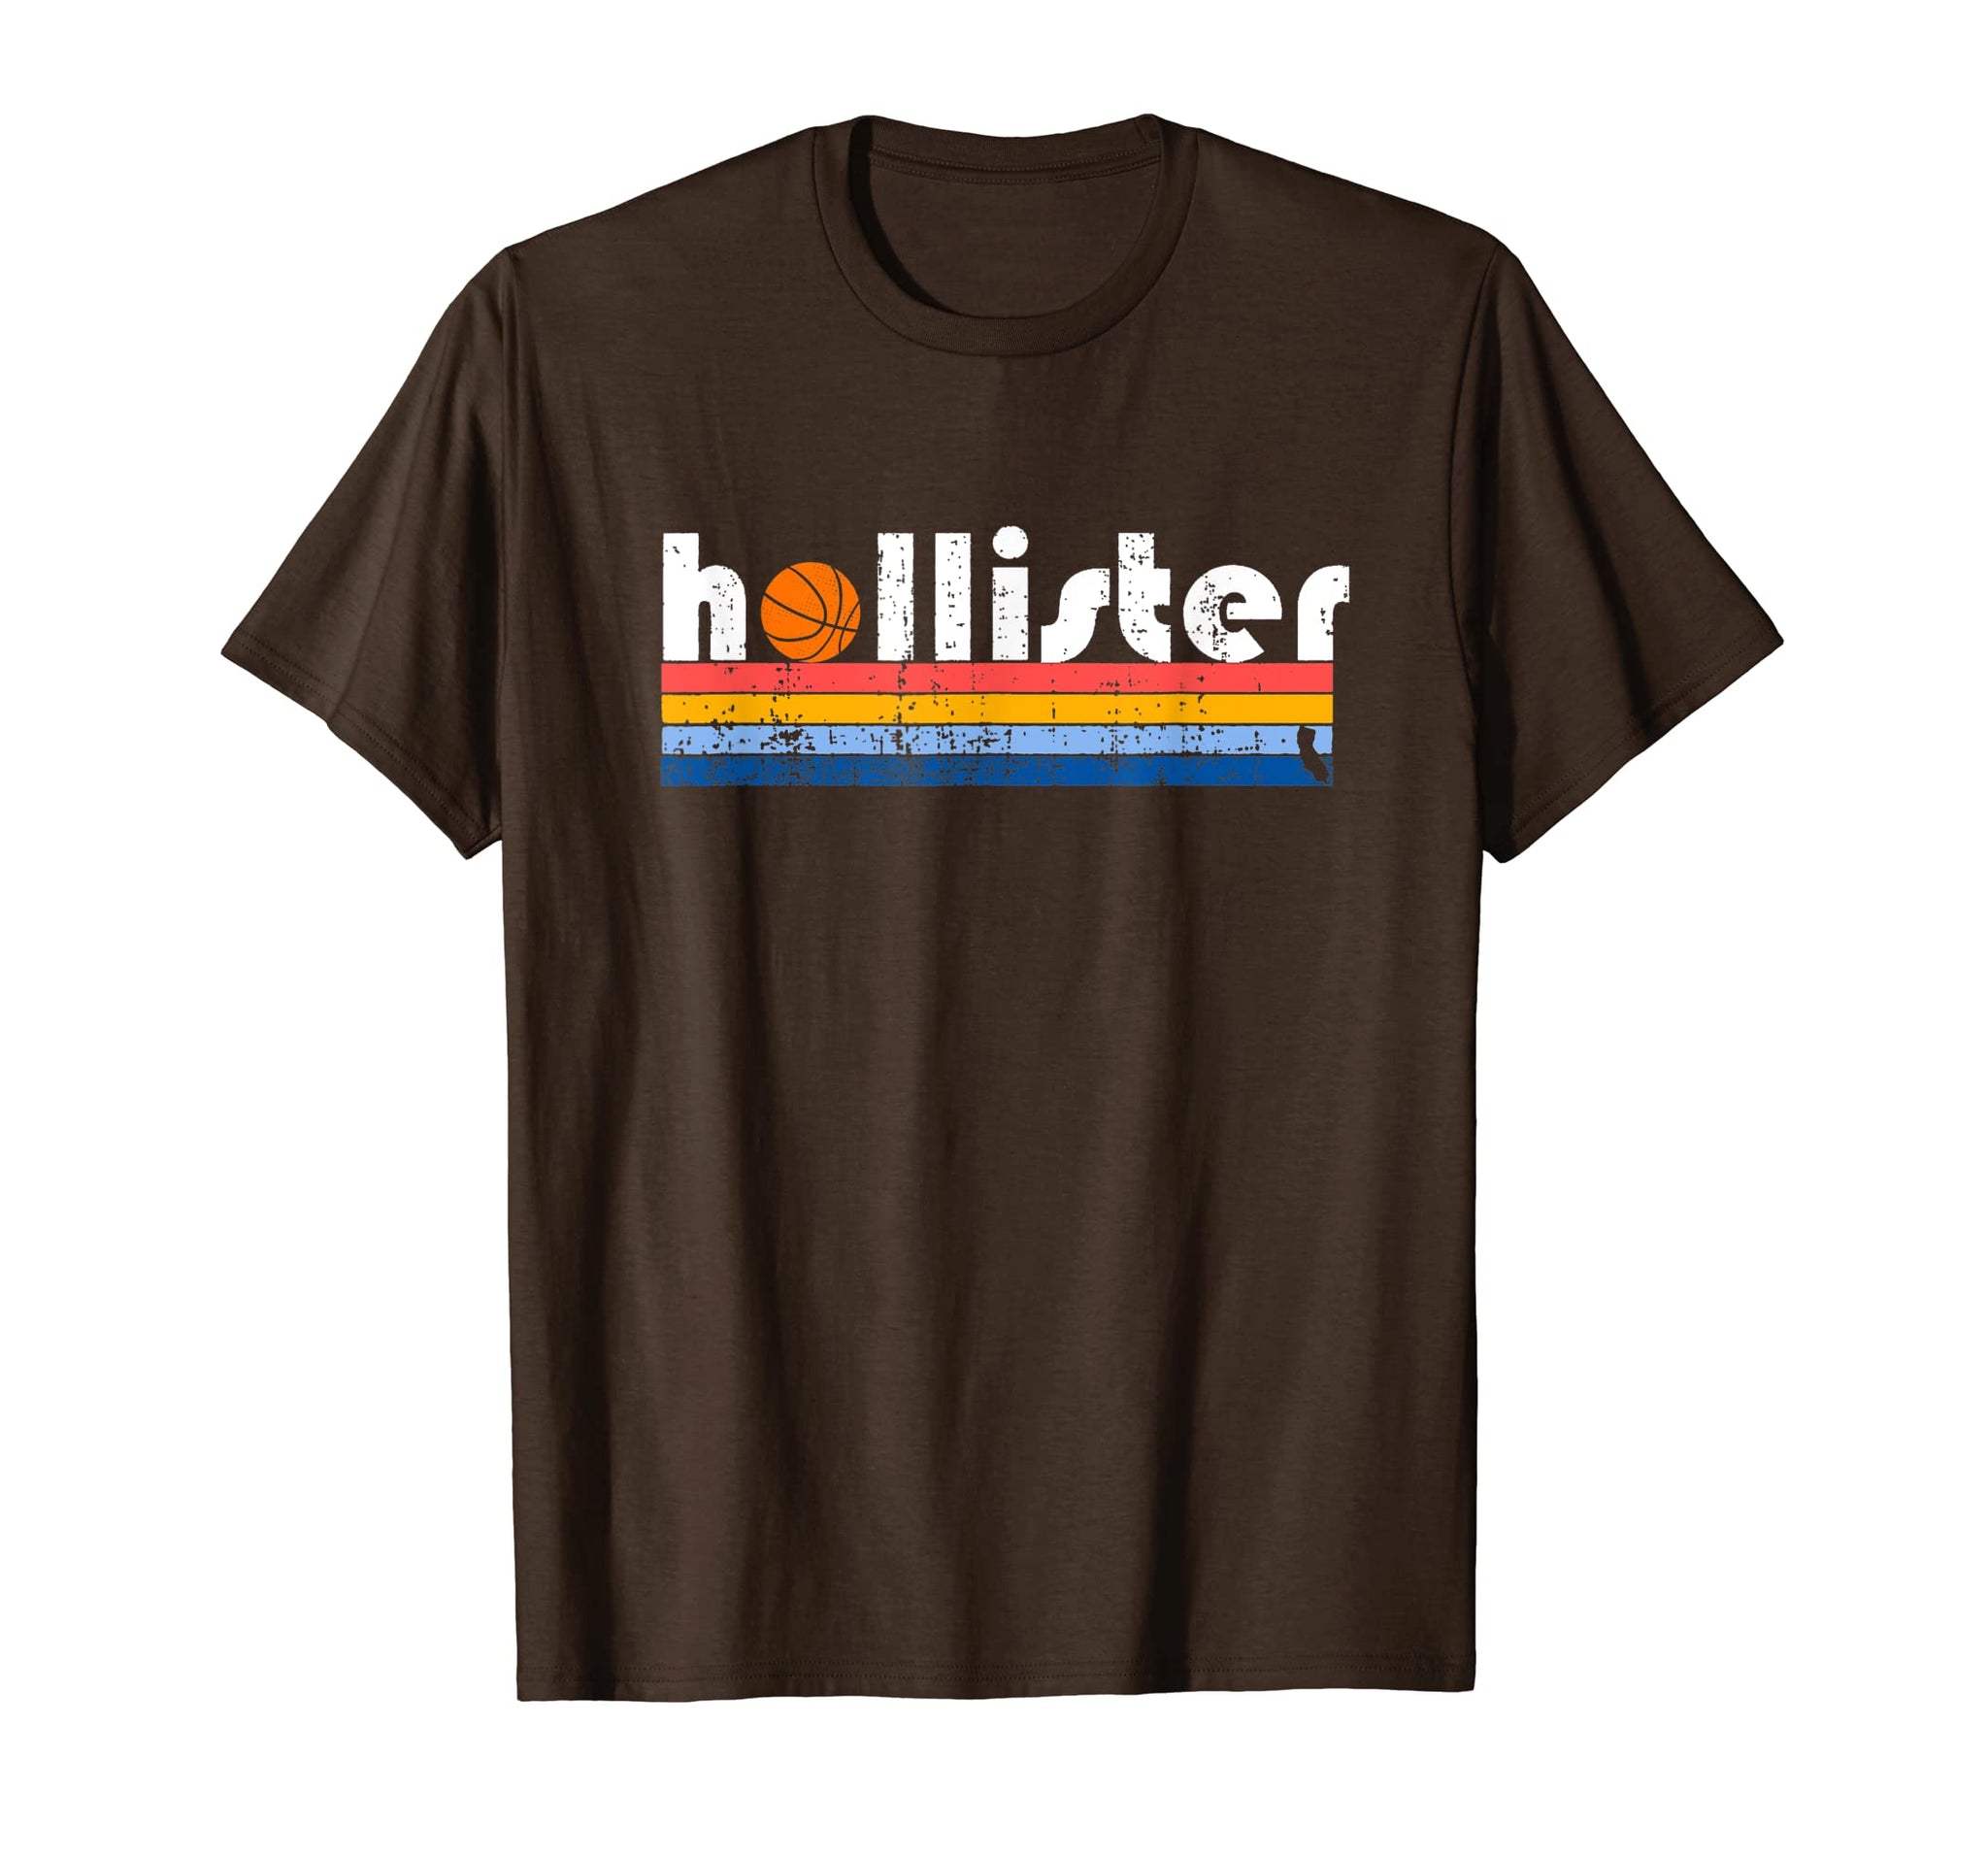 hollister shirts uk